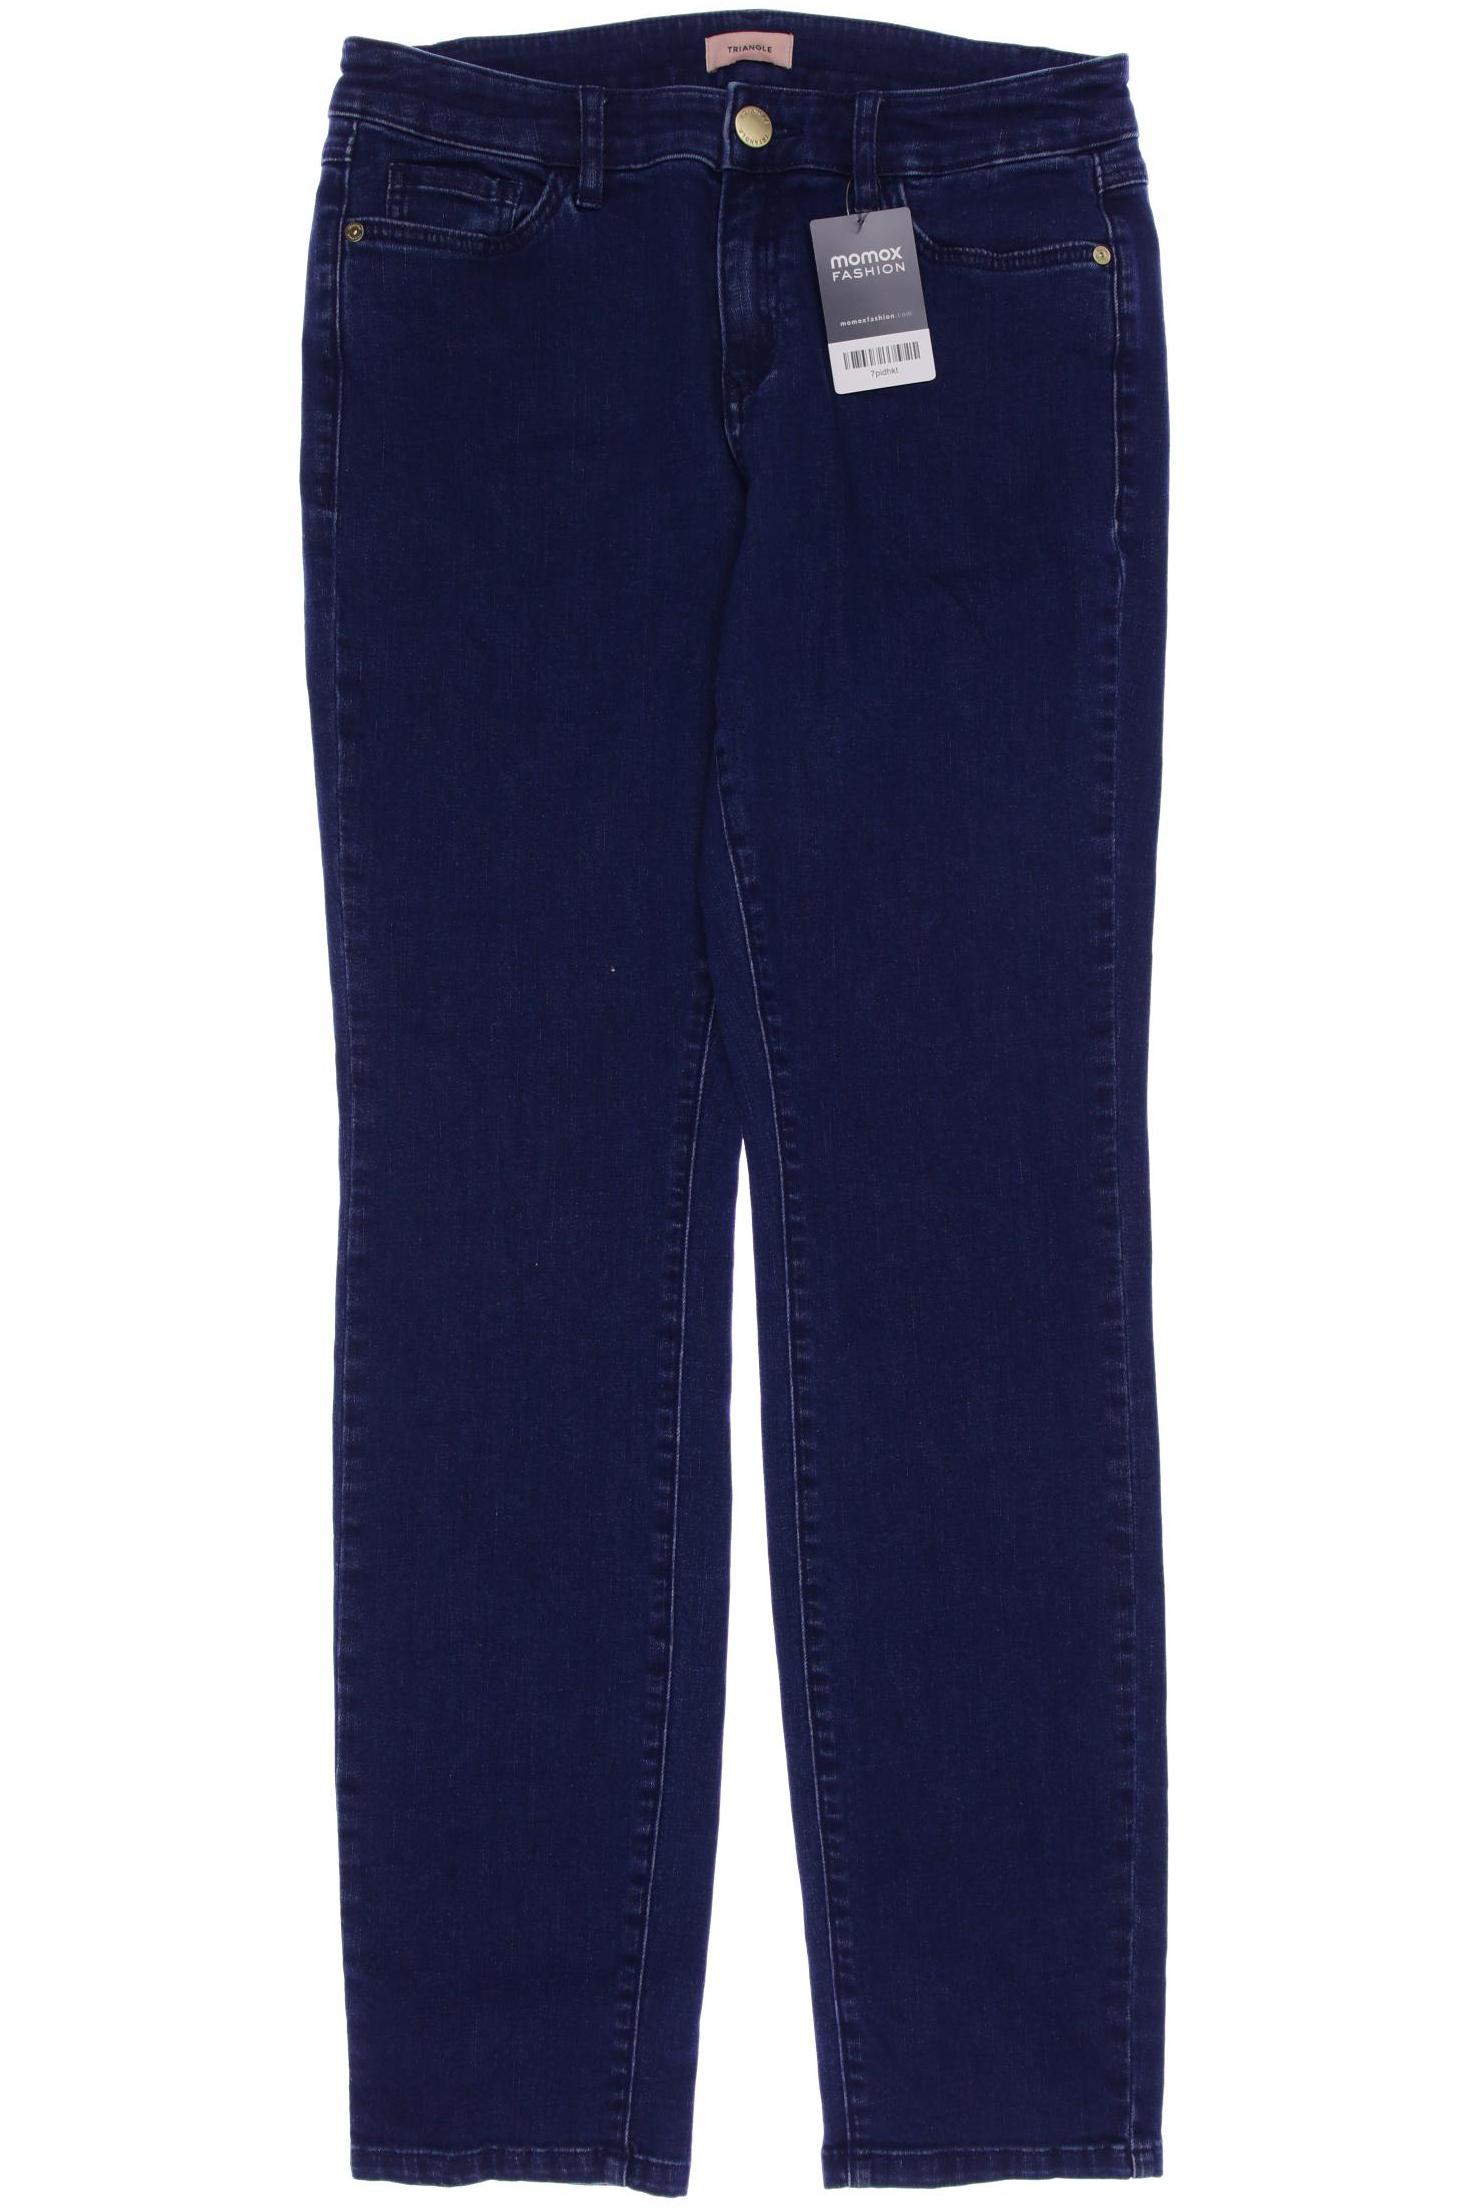 TRIANGLE Damen Jeans, marineblau von Triangle